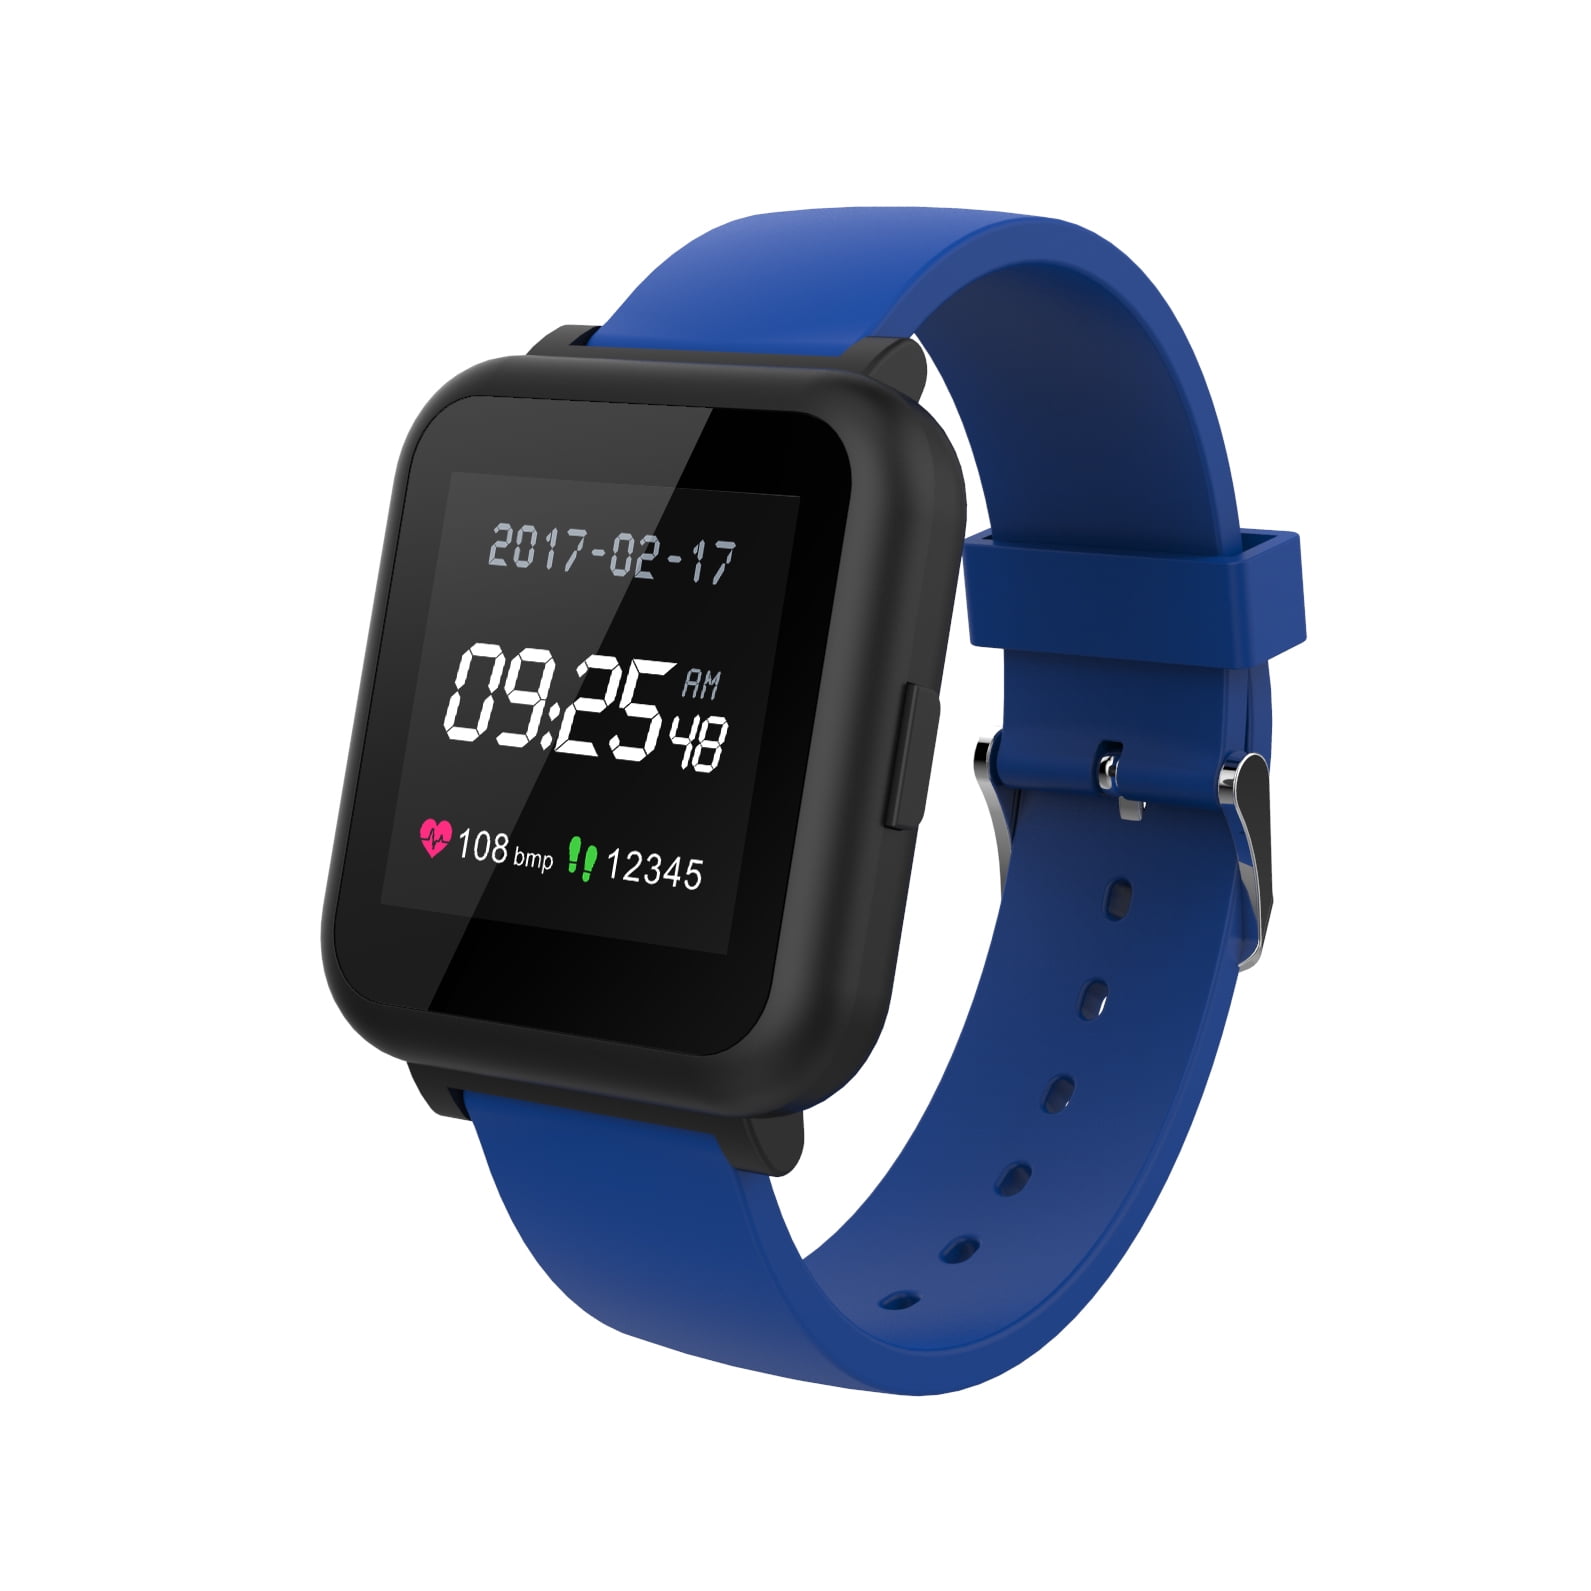 Smartwatch Tracker with Heart Rate Monitor Tracker - Walmart.com